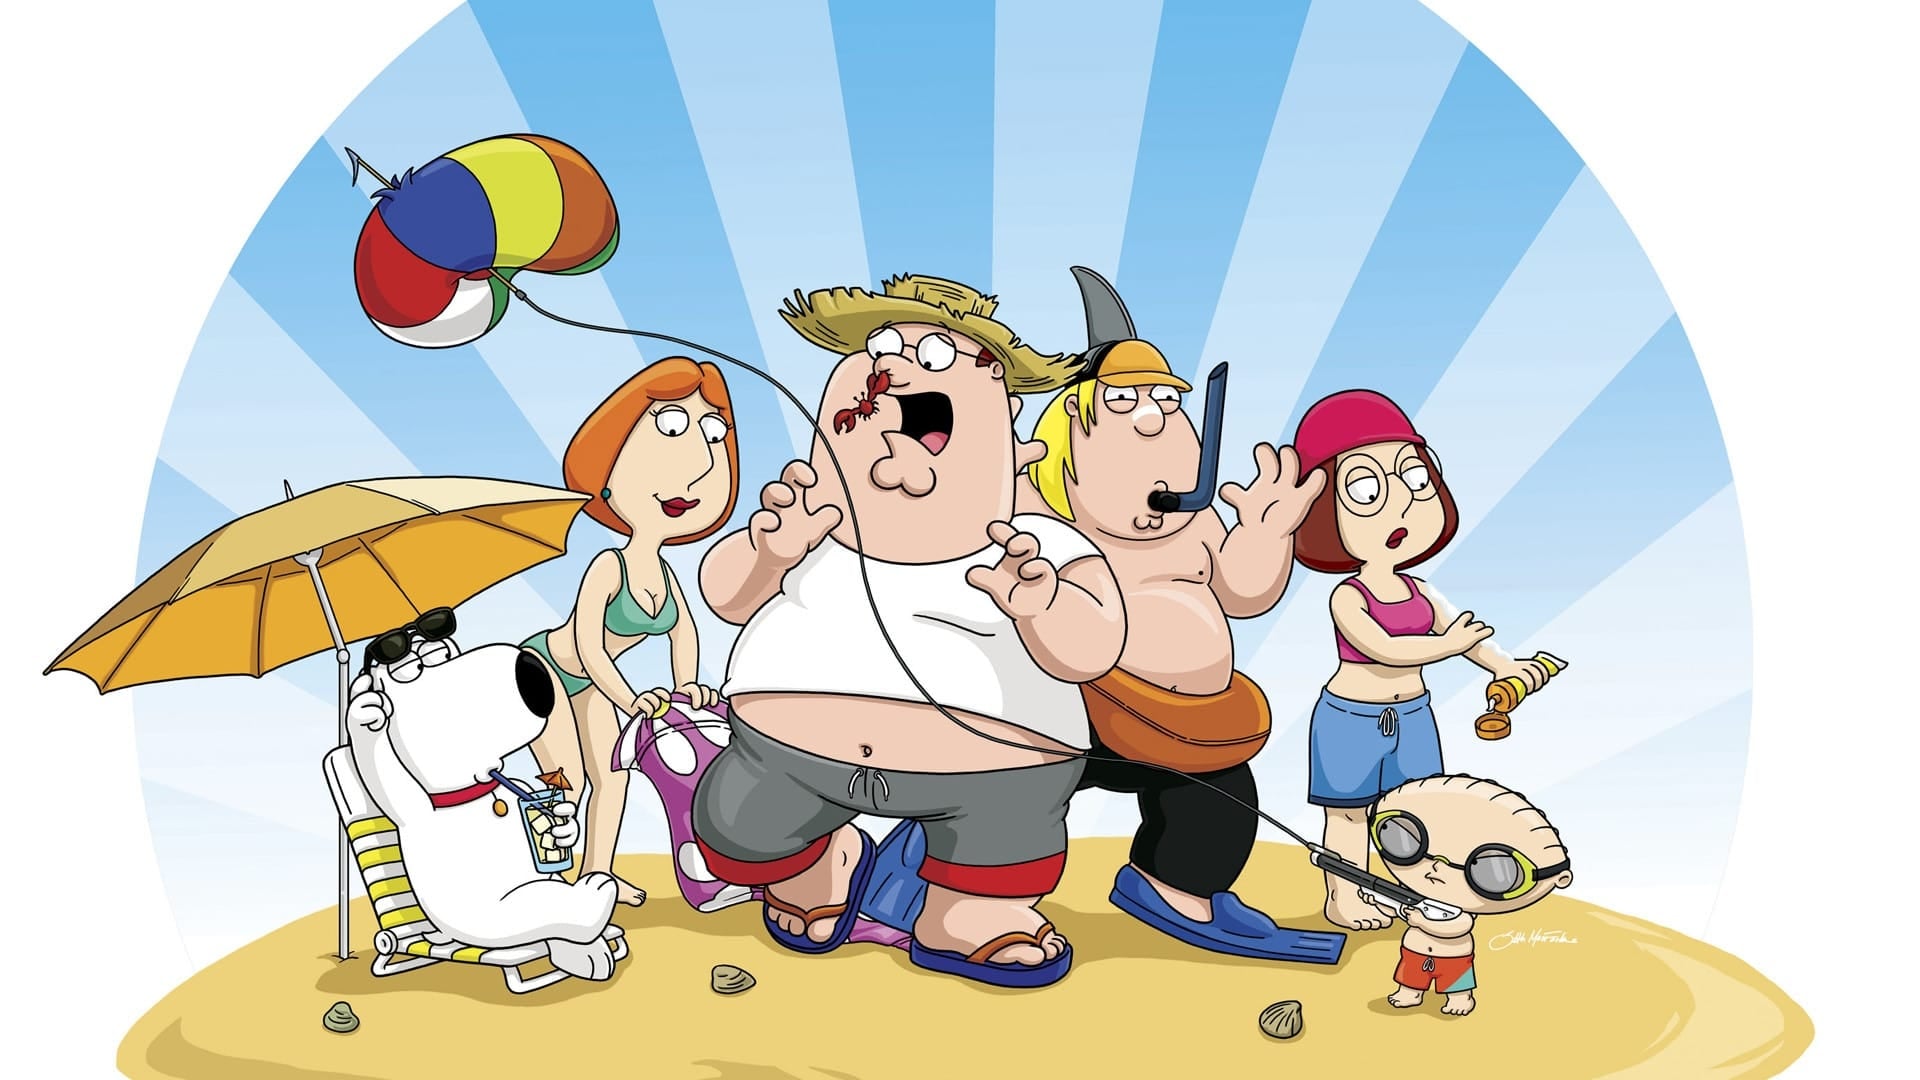 Family Guy - Season 18